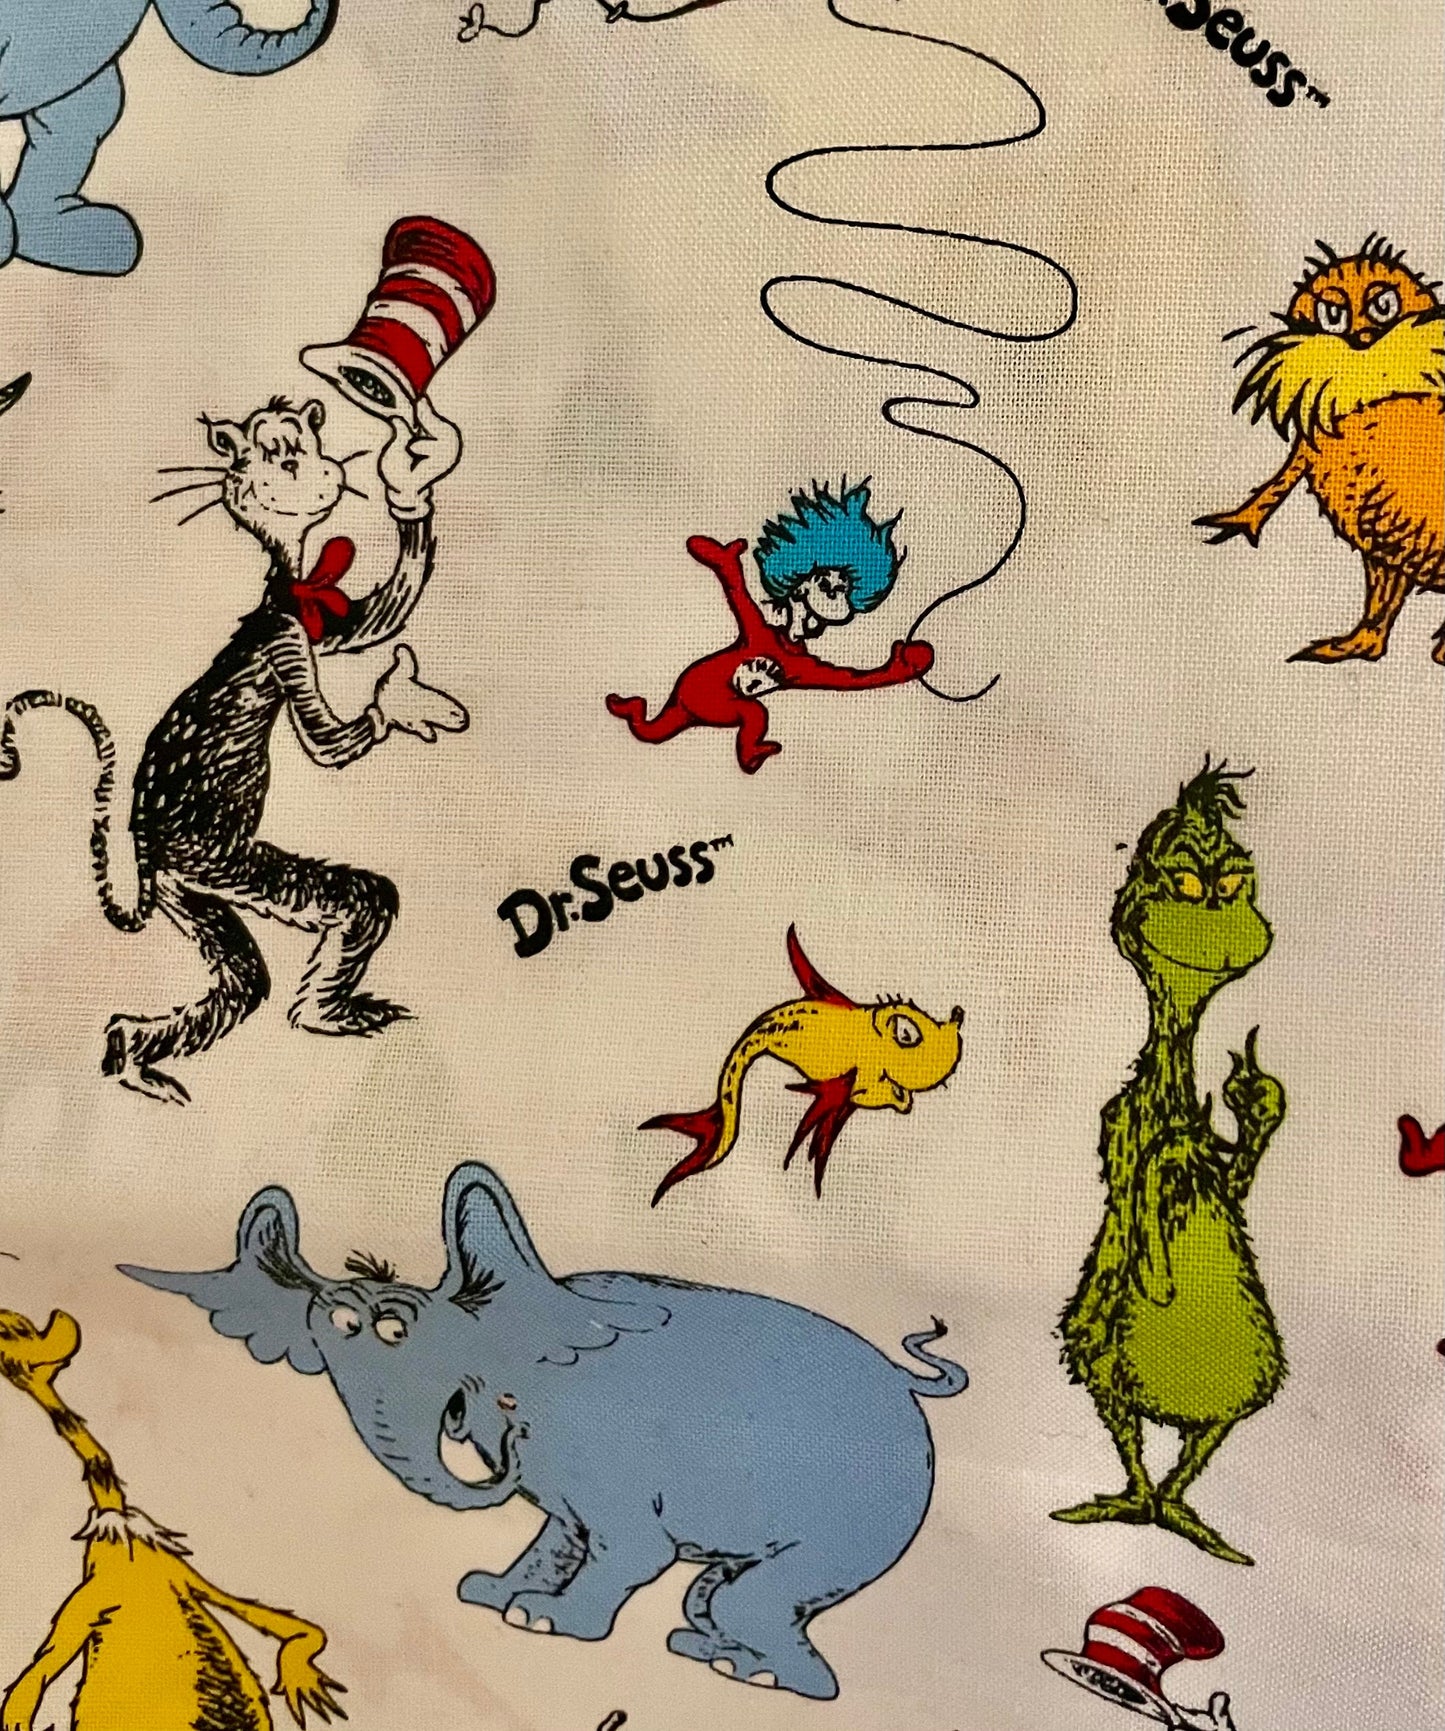 Best Dr Seuss reversible blanket!